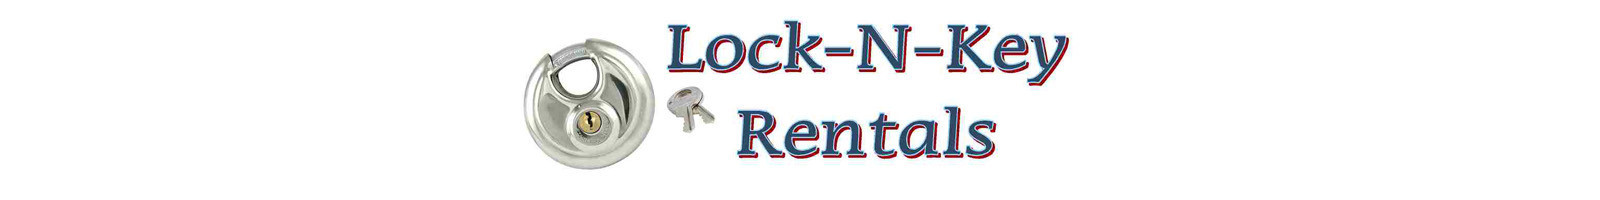 Lock-N-Key Rentals